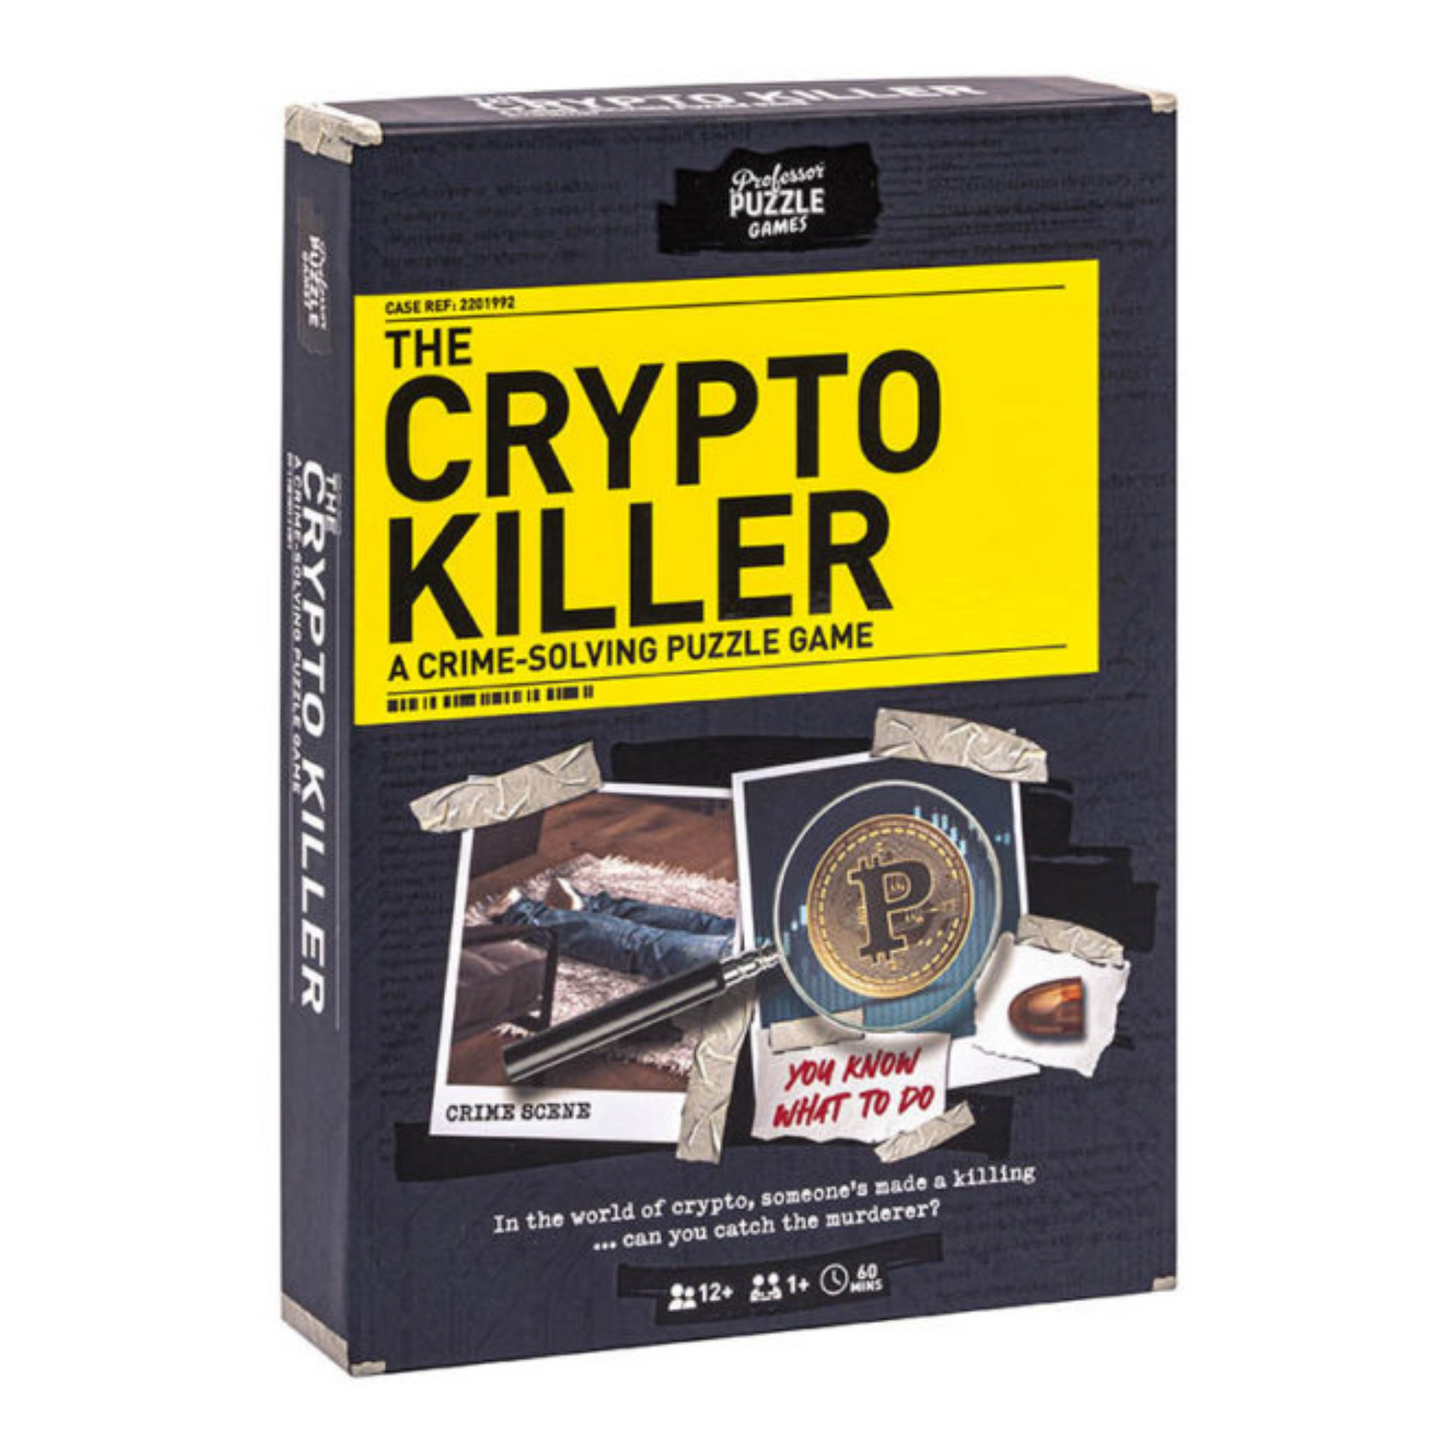 The Crypto Killer